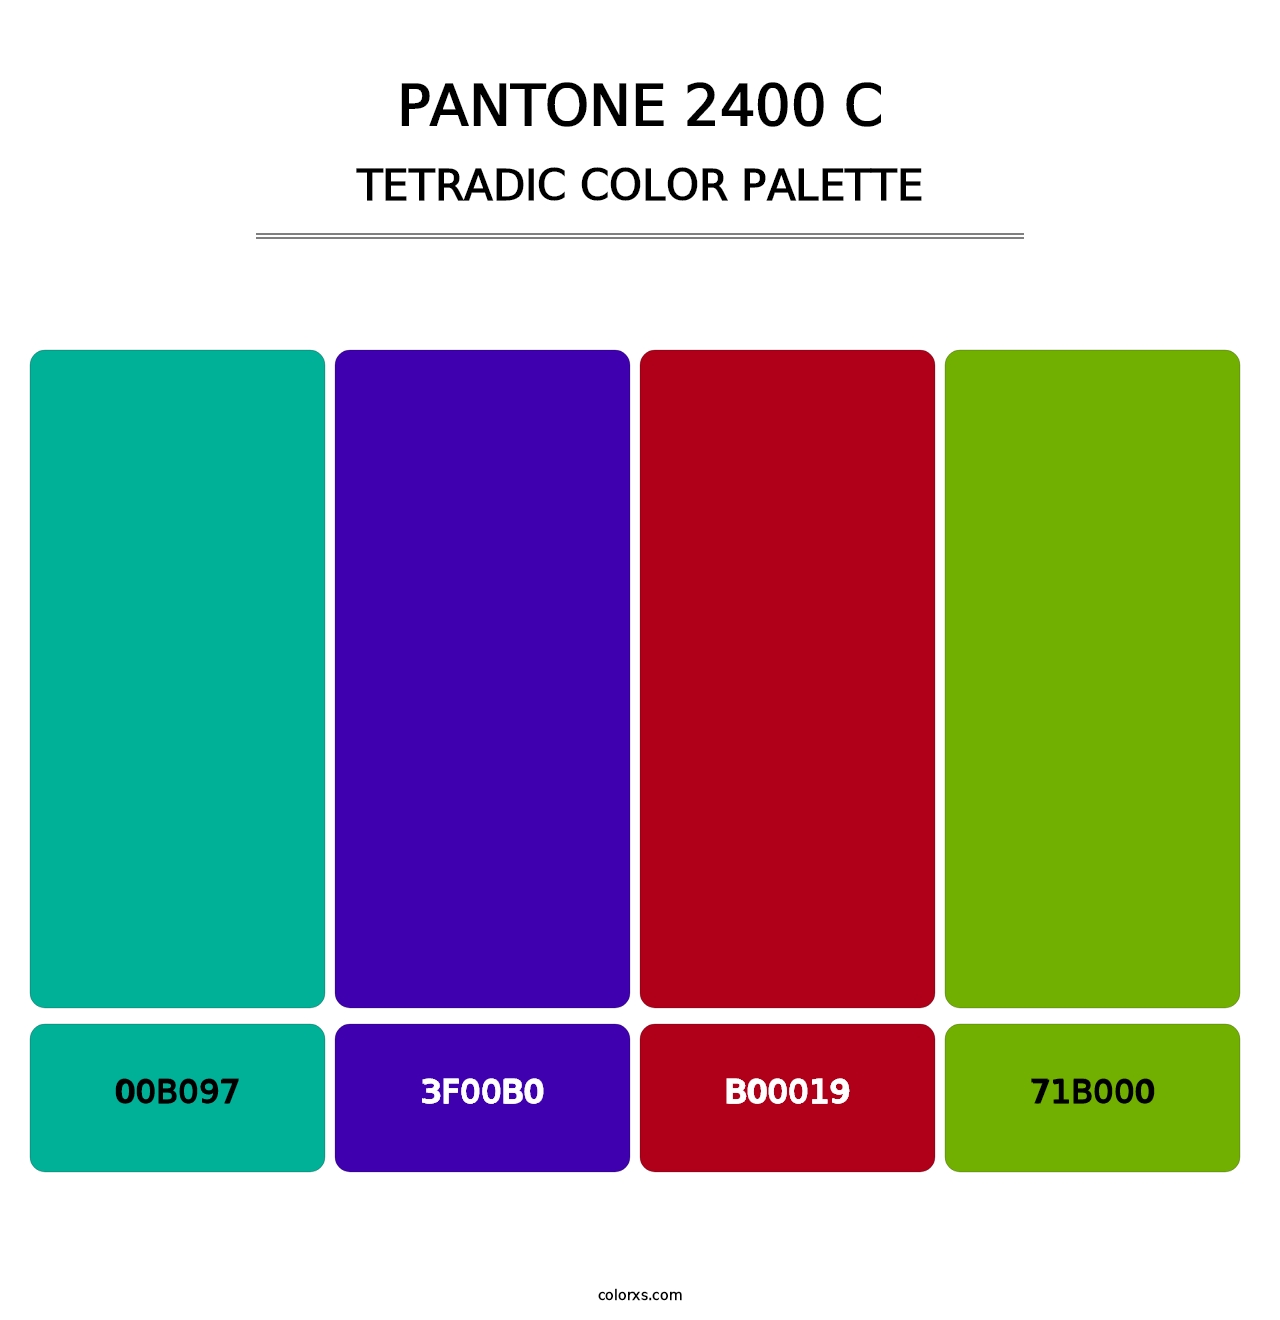 PANTONE 2400 C - Tetradic Color Palette